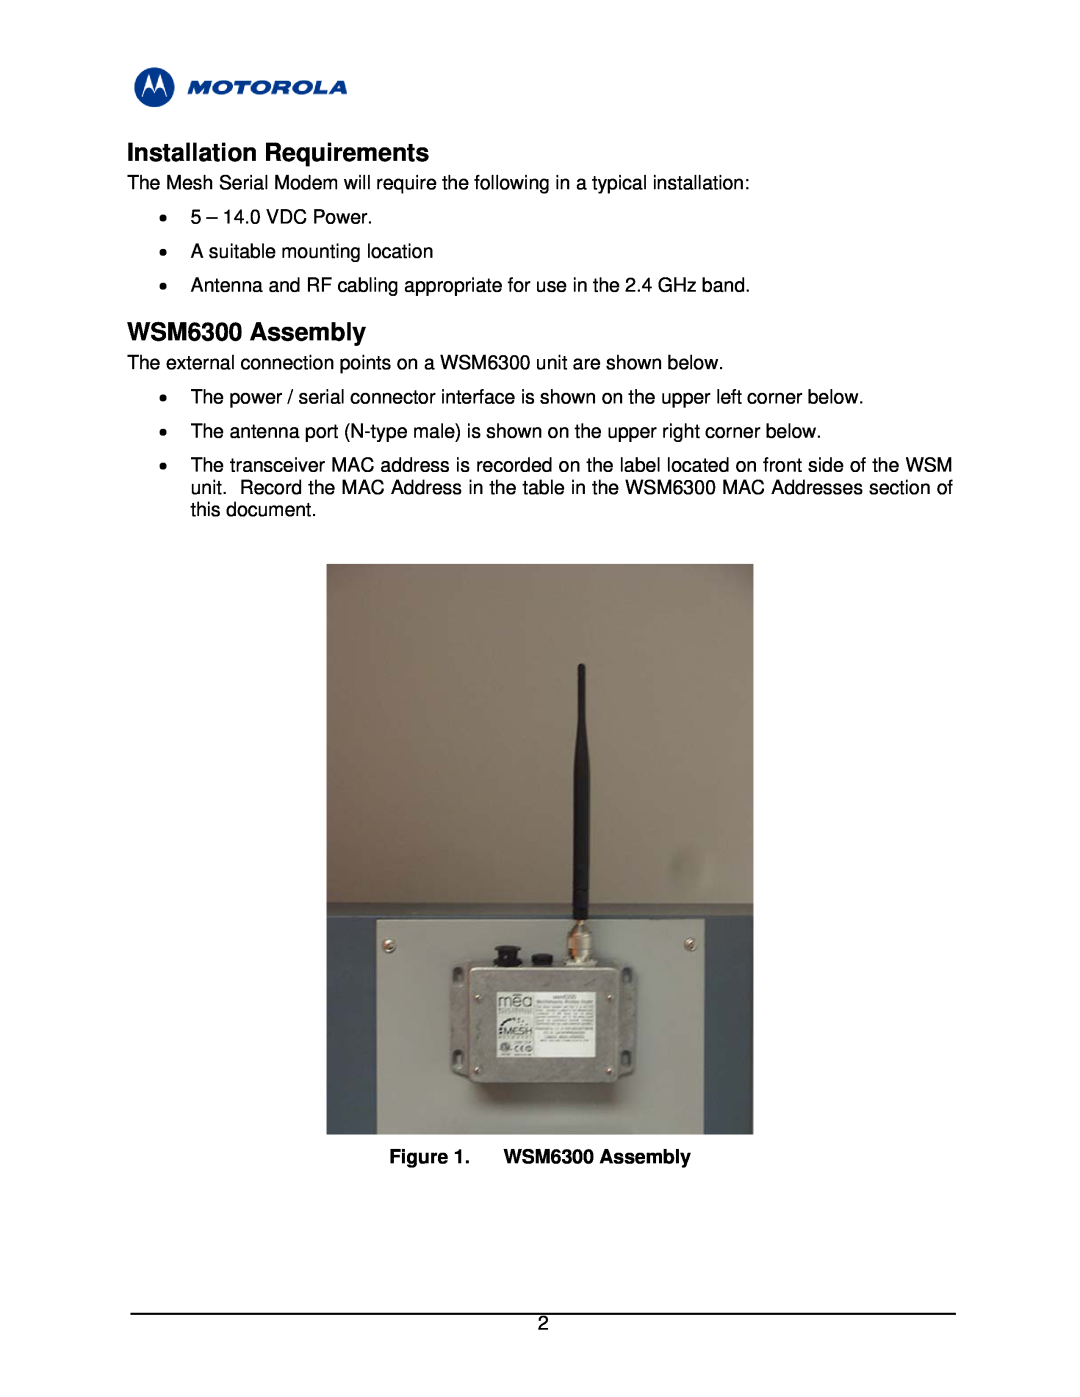 Motorola manual Installation Requirements, WSM6300 Assembly 